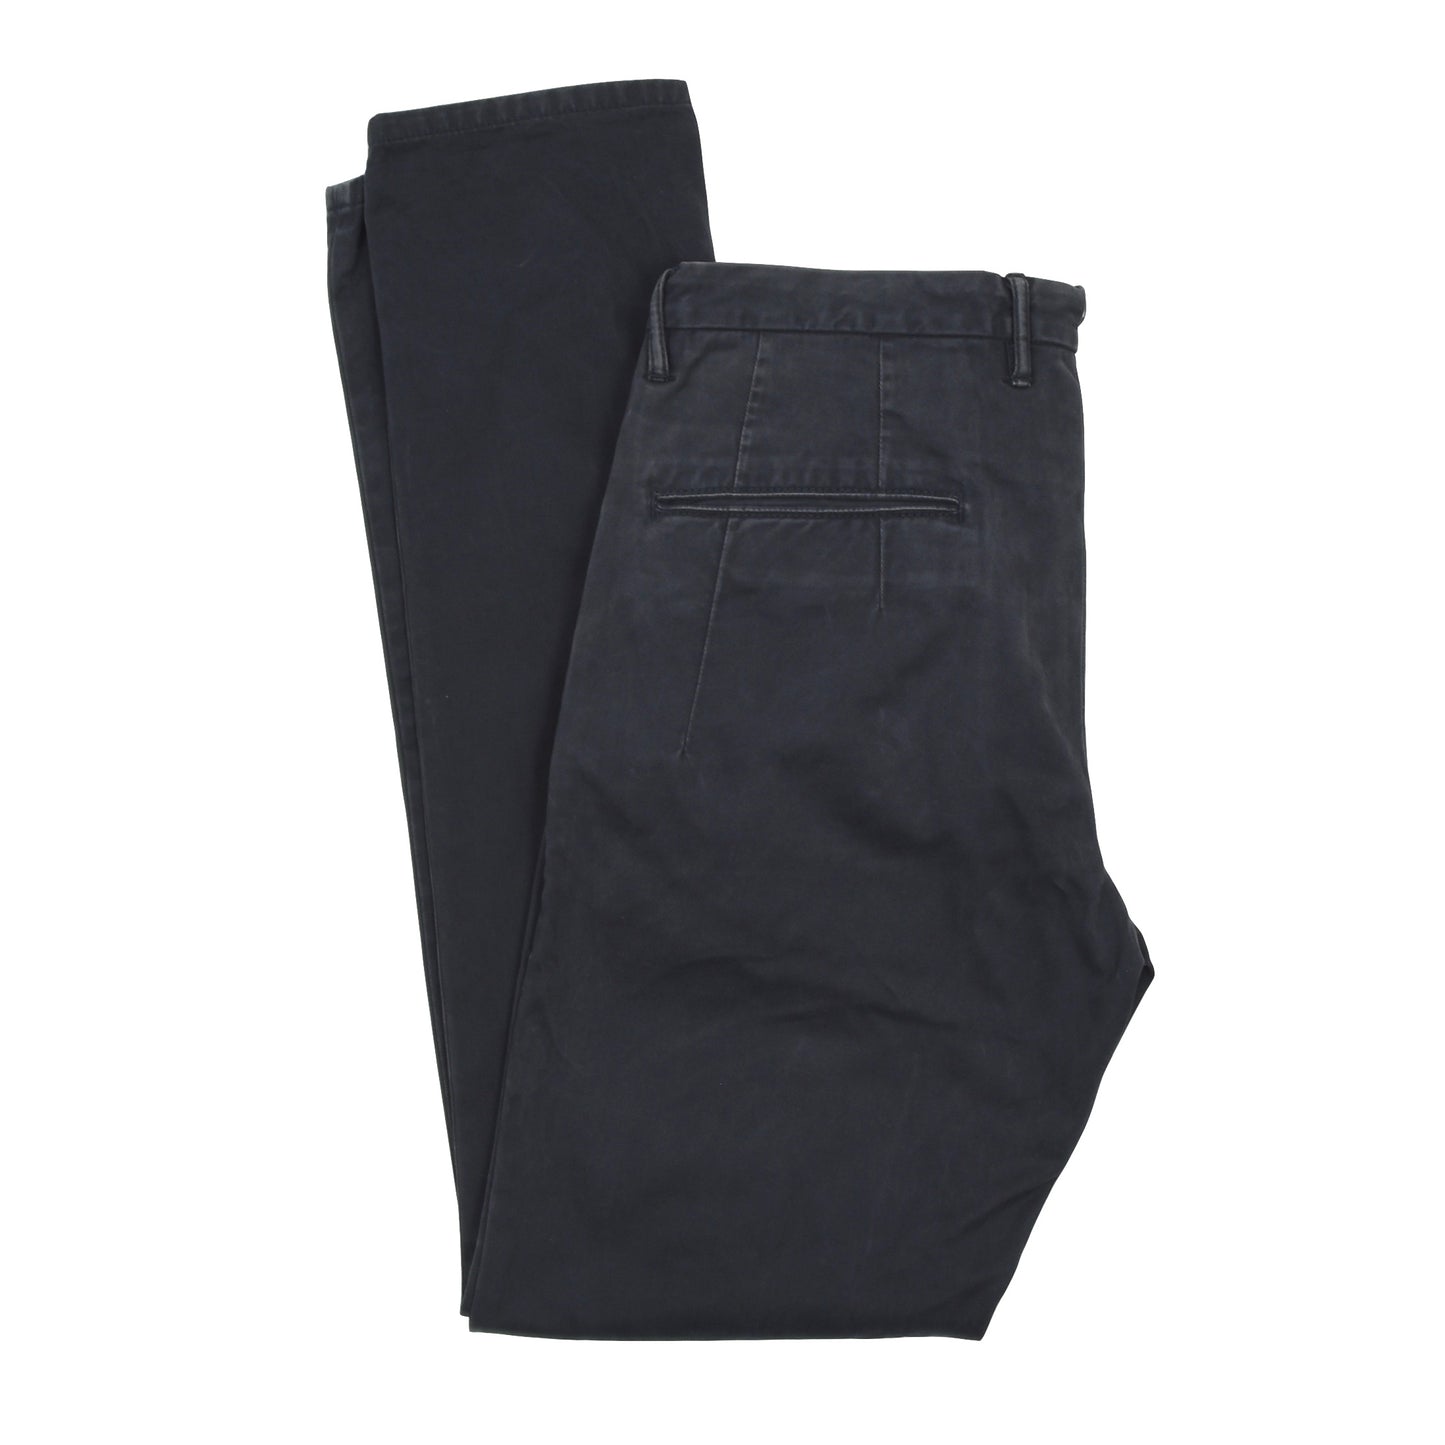 Incotex Cotton Pants Slacks Size 32 - Charcoal